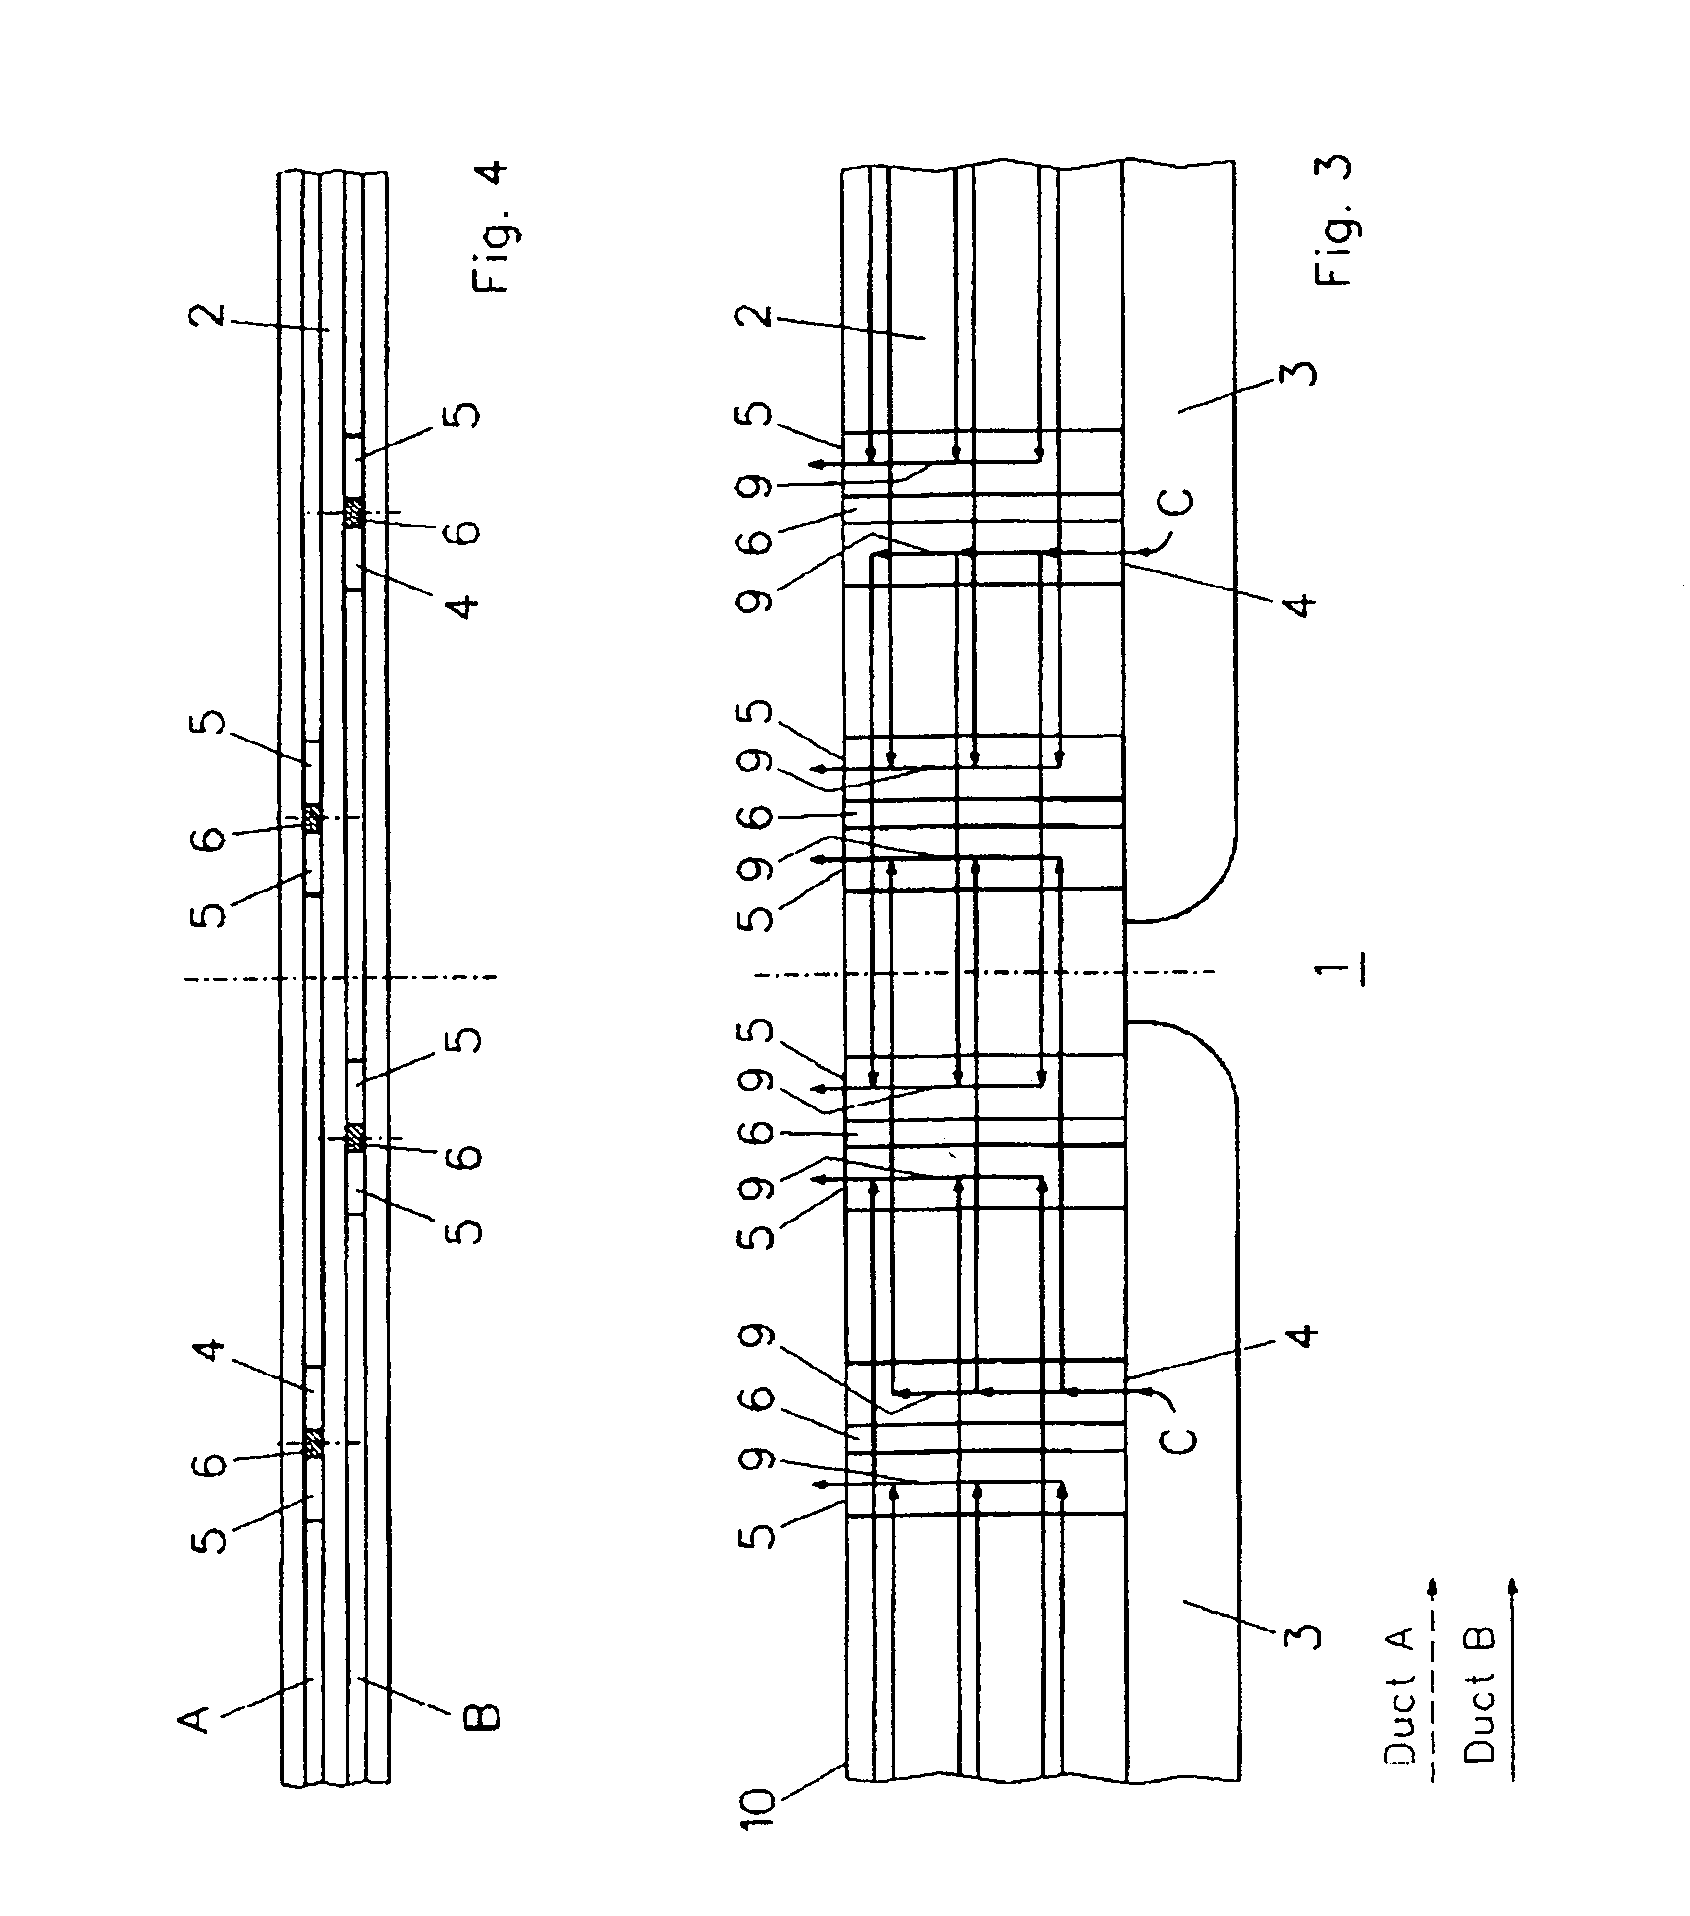 Multi-path cooling of a turbo-generator rotor winding